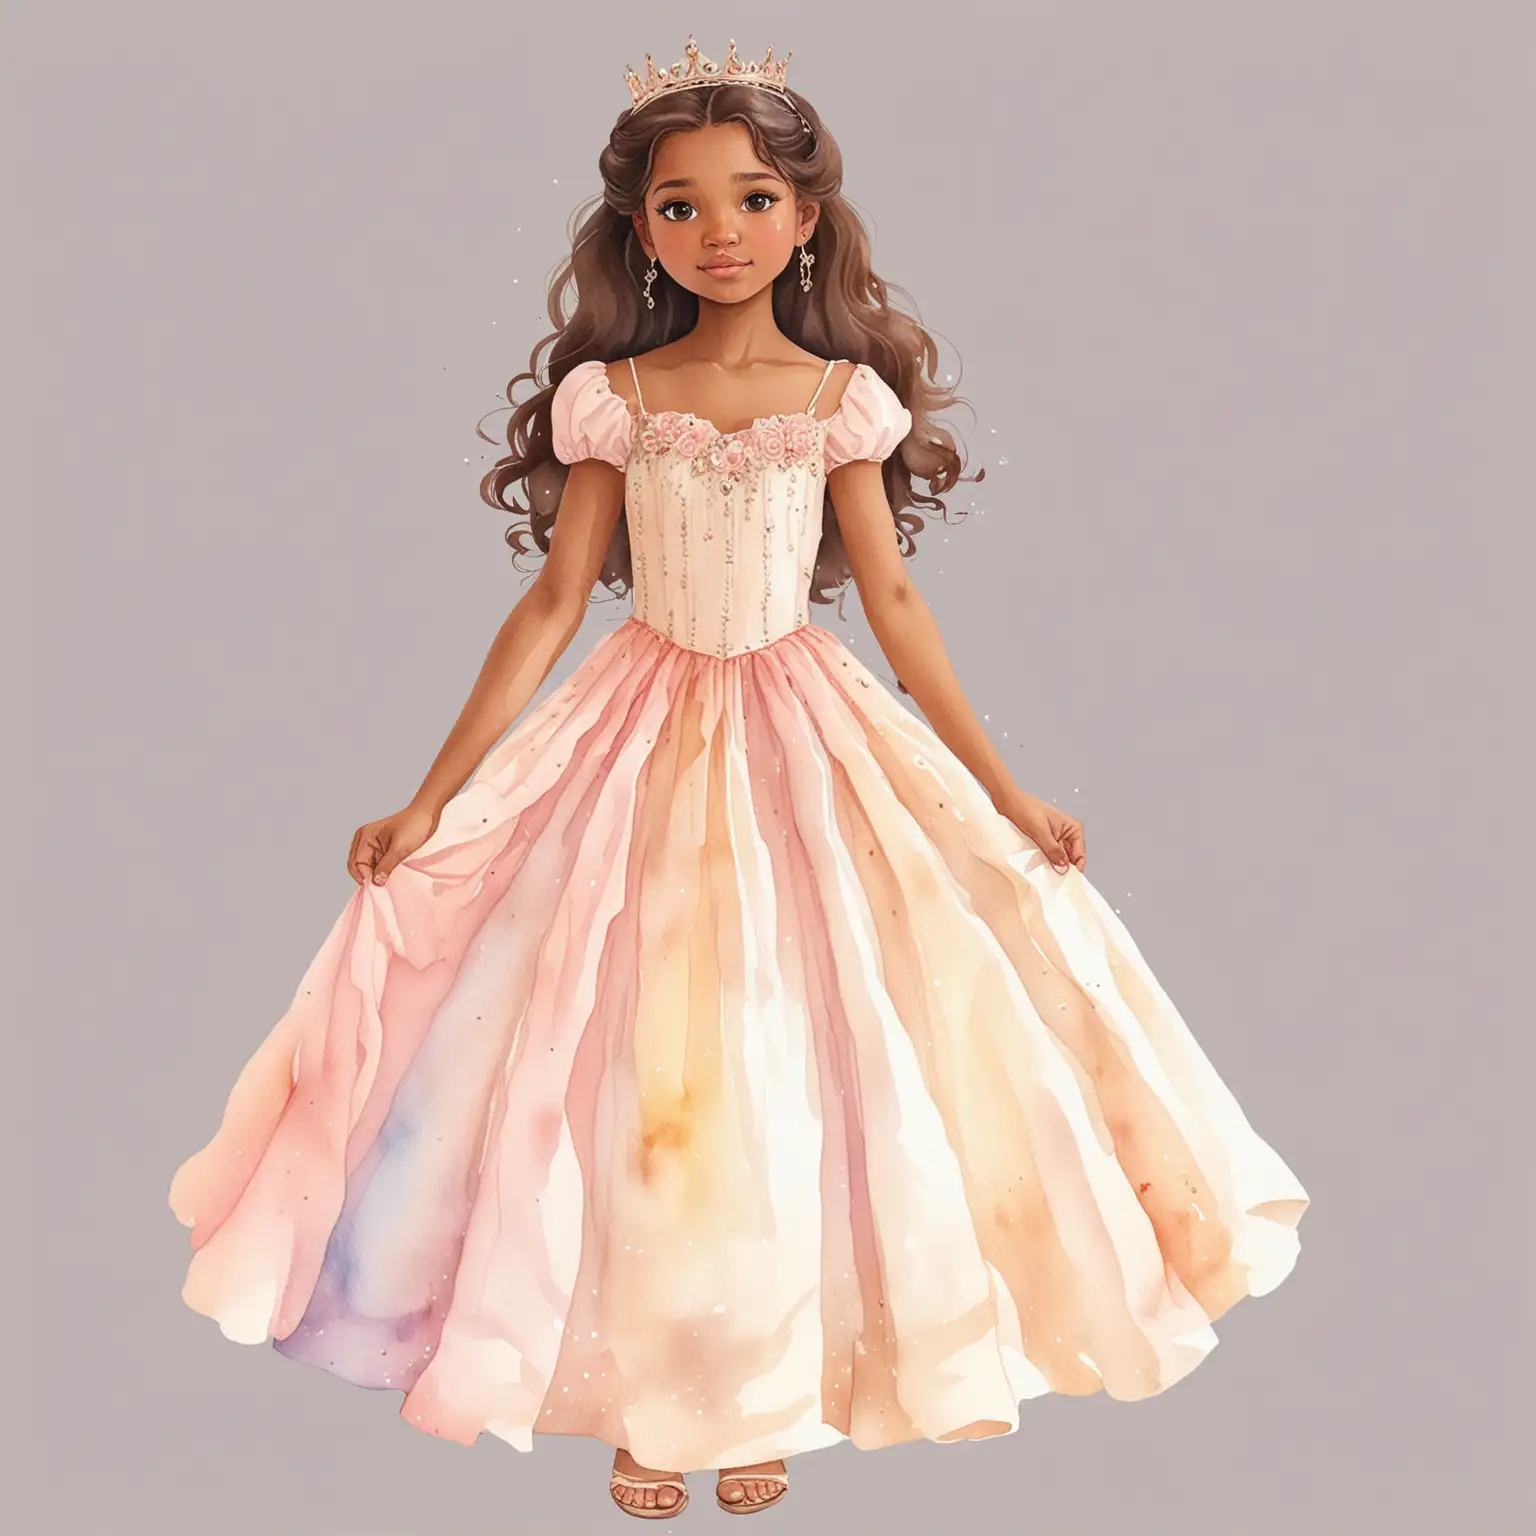 Elegant Watercolor Princess Portrait BrownSkinned Royalty in Pastel Dress